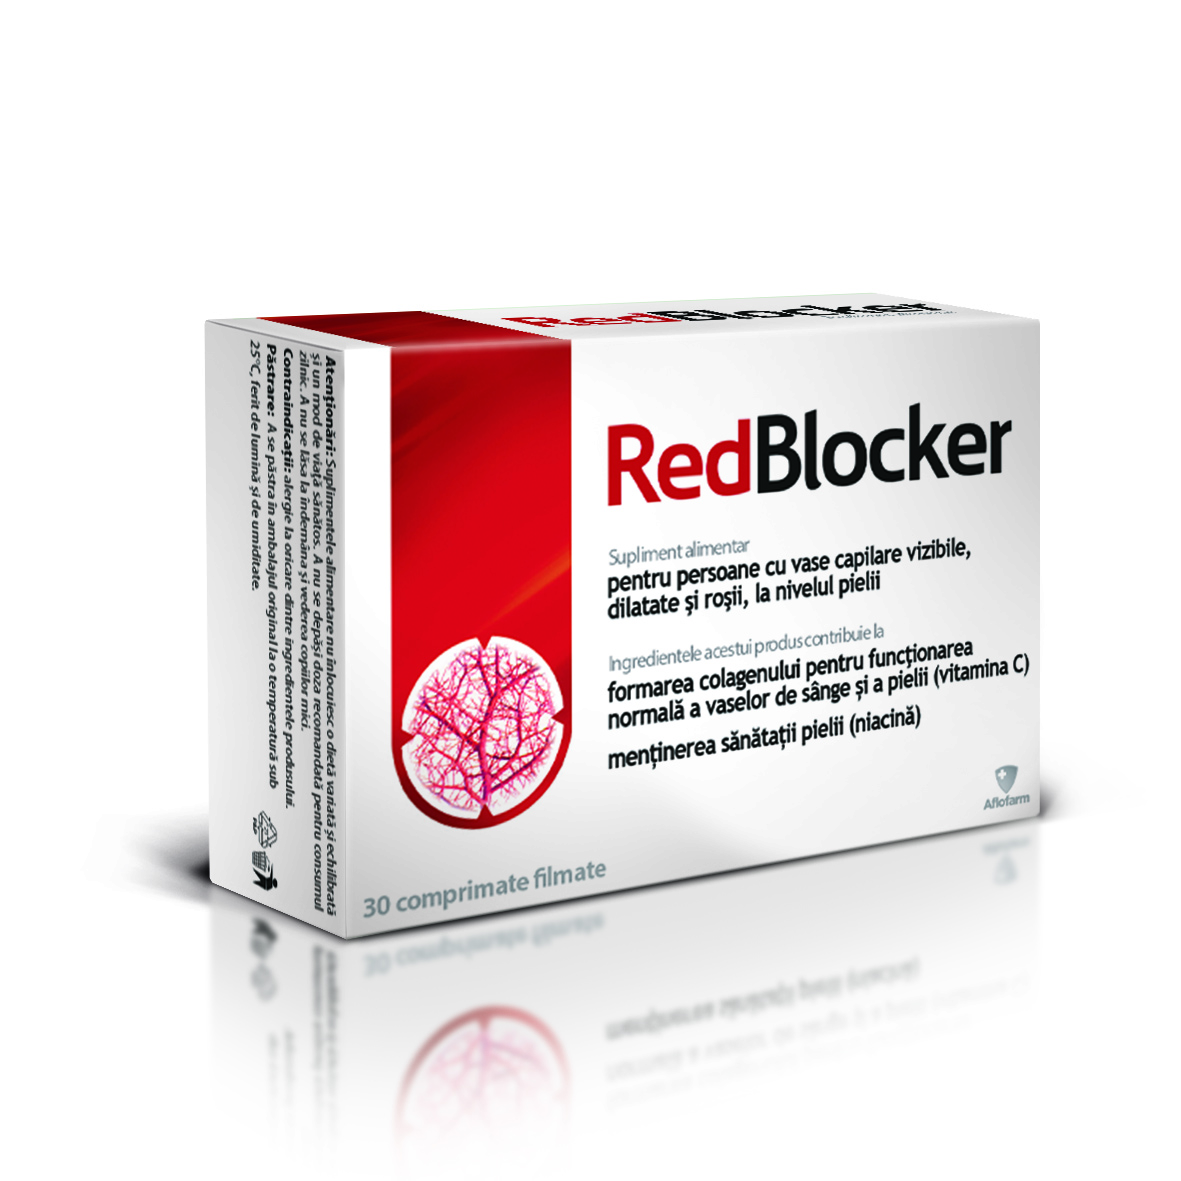 Piele cu probleme - Redblocker x 30 cp film, epastila.ro